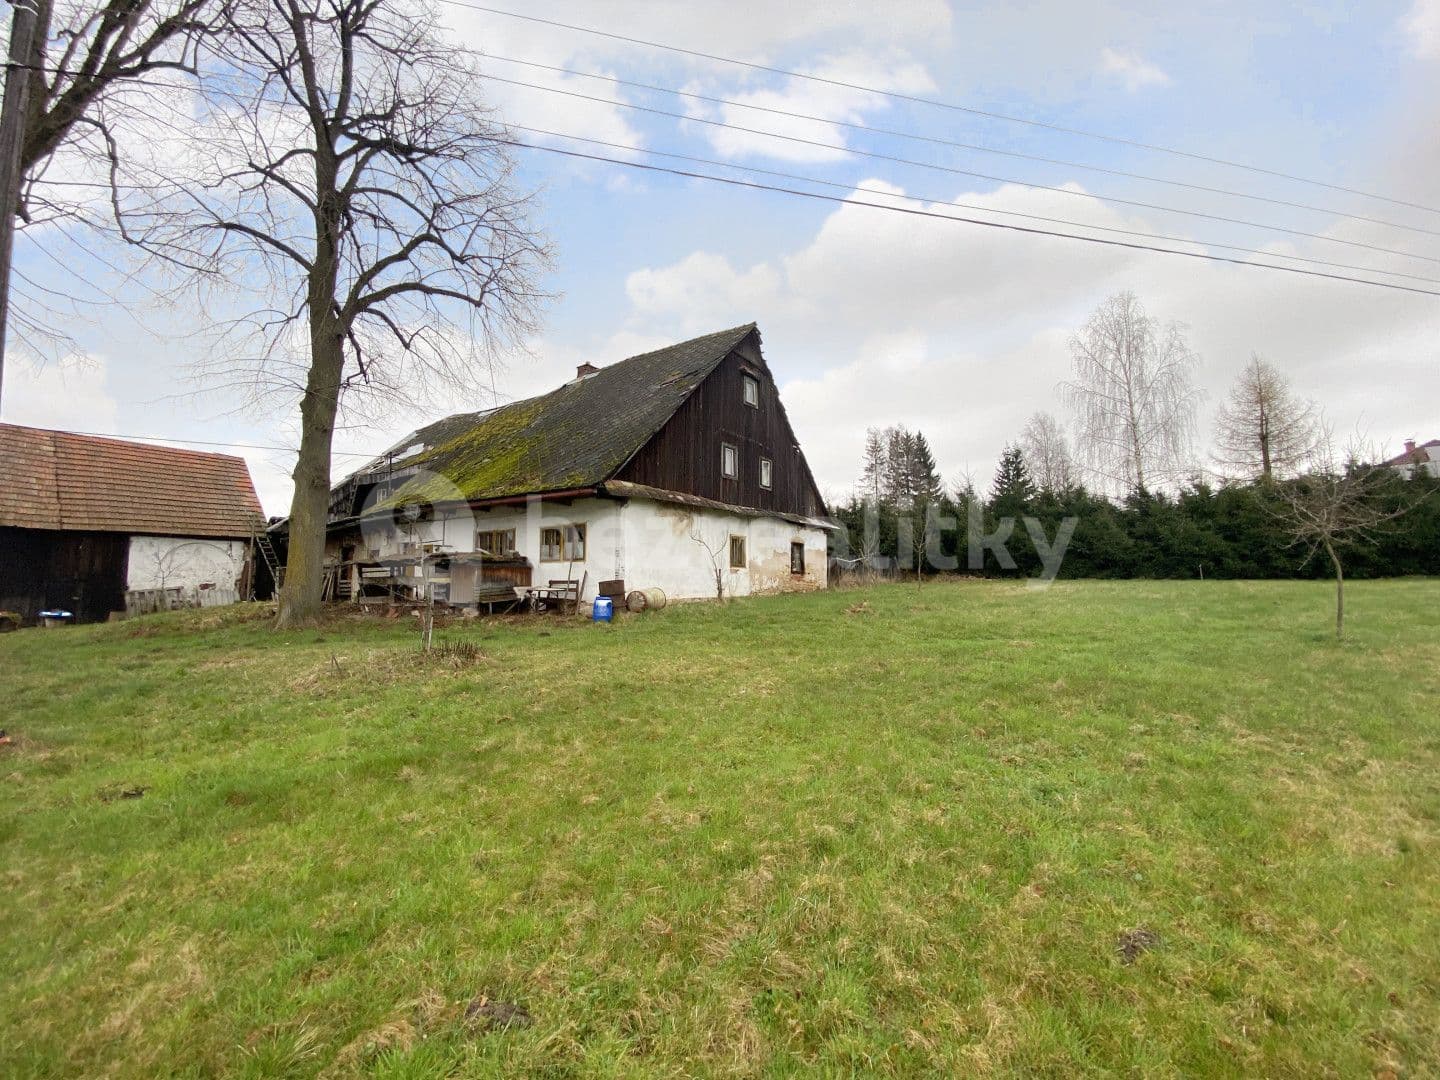 Prodej domu 120 m², pozemek 3.948 m², Liberk, Královéhradecký kraj